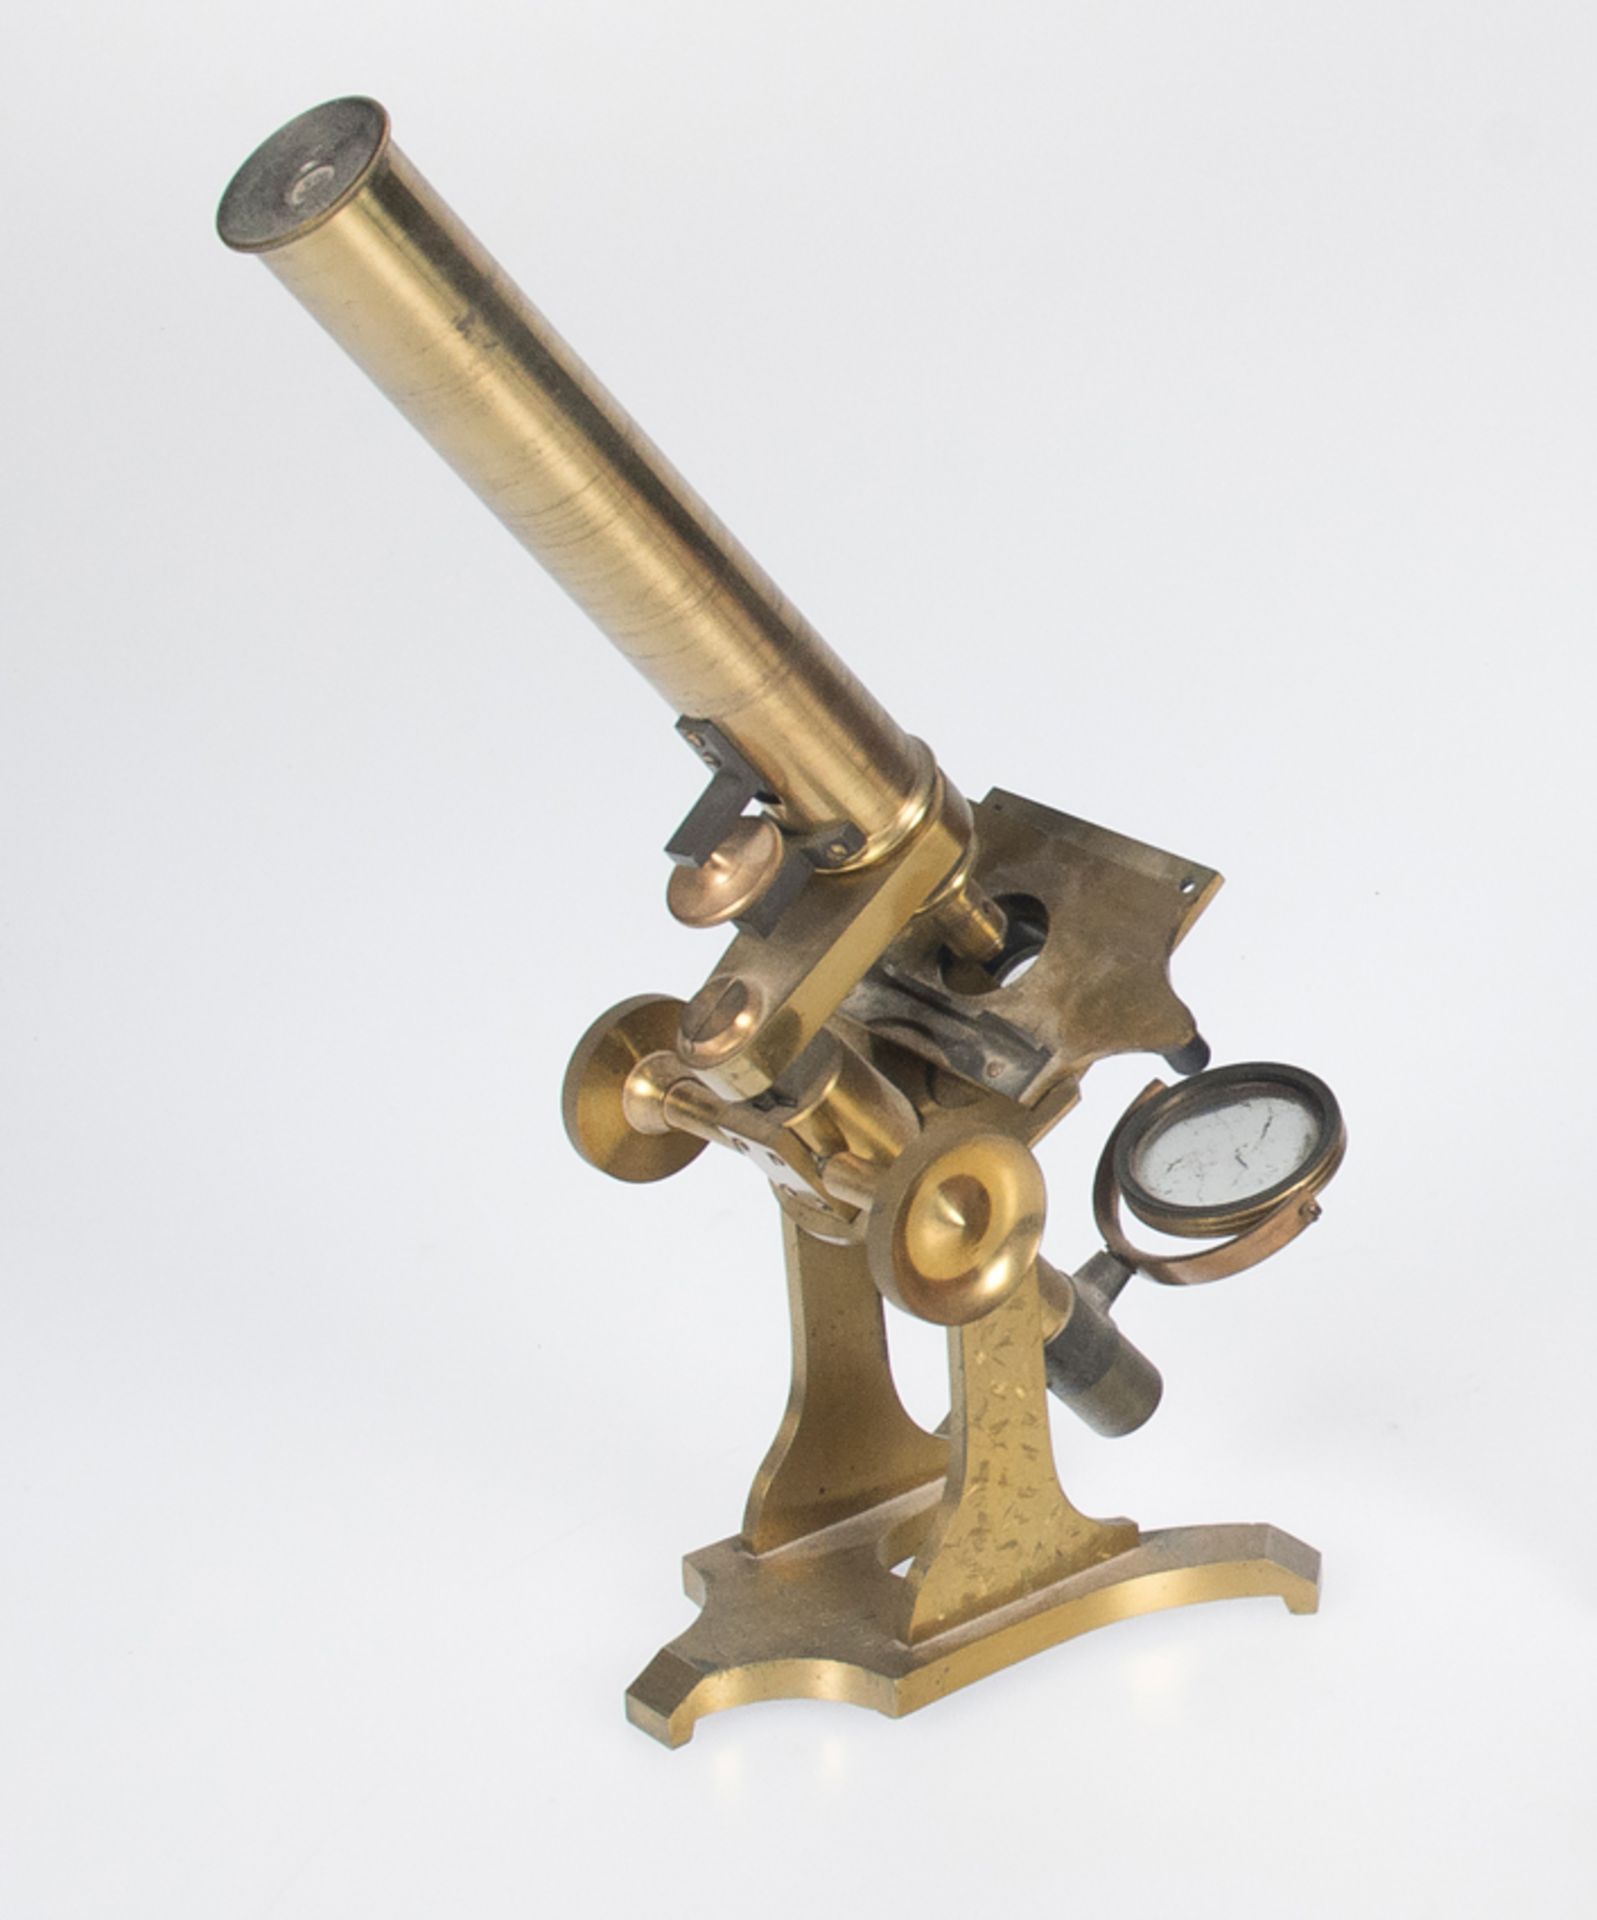 Microscope. J. H. Steward. London. England. 19th century. - Image 4 of 14